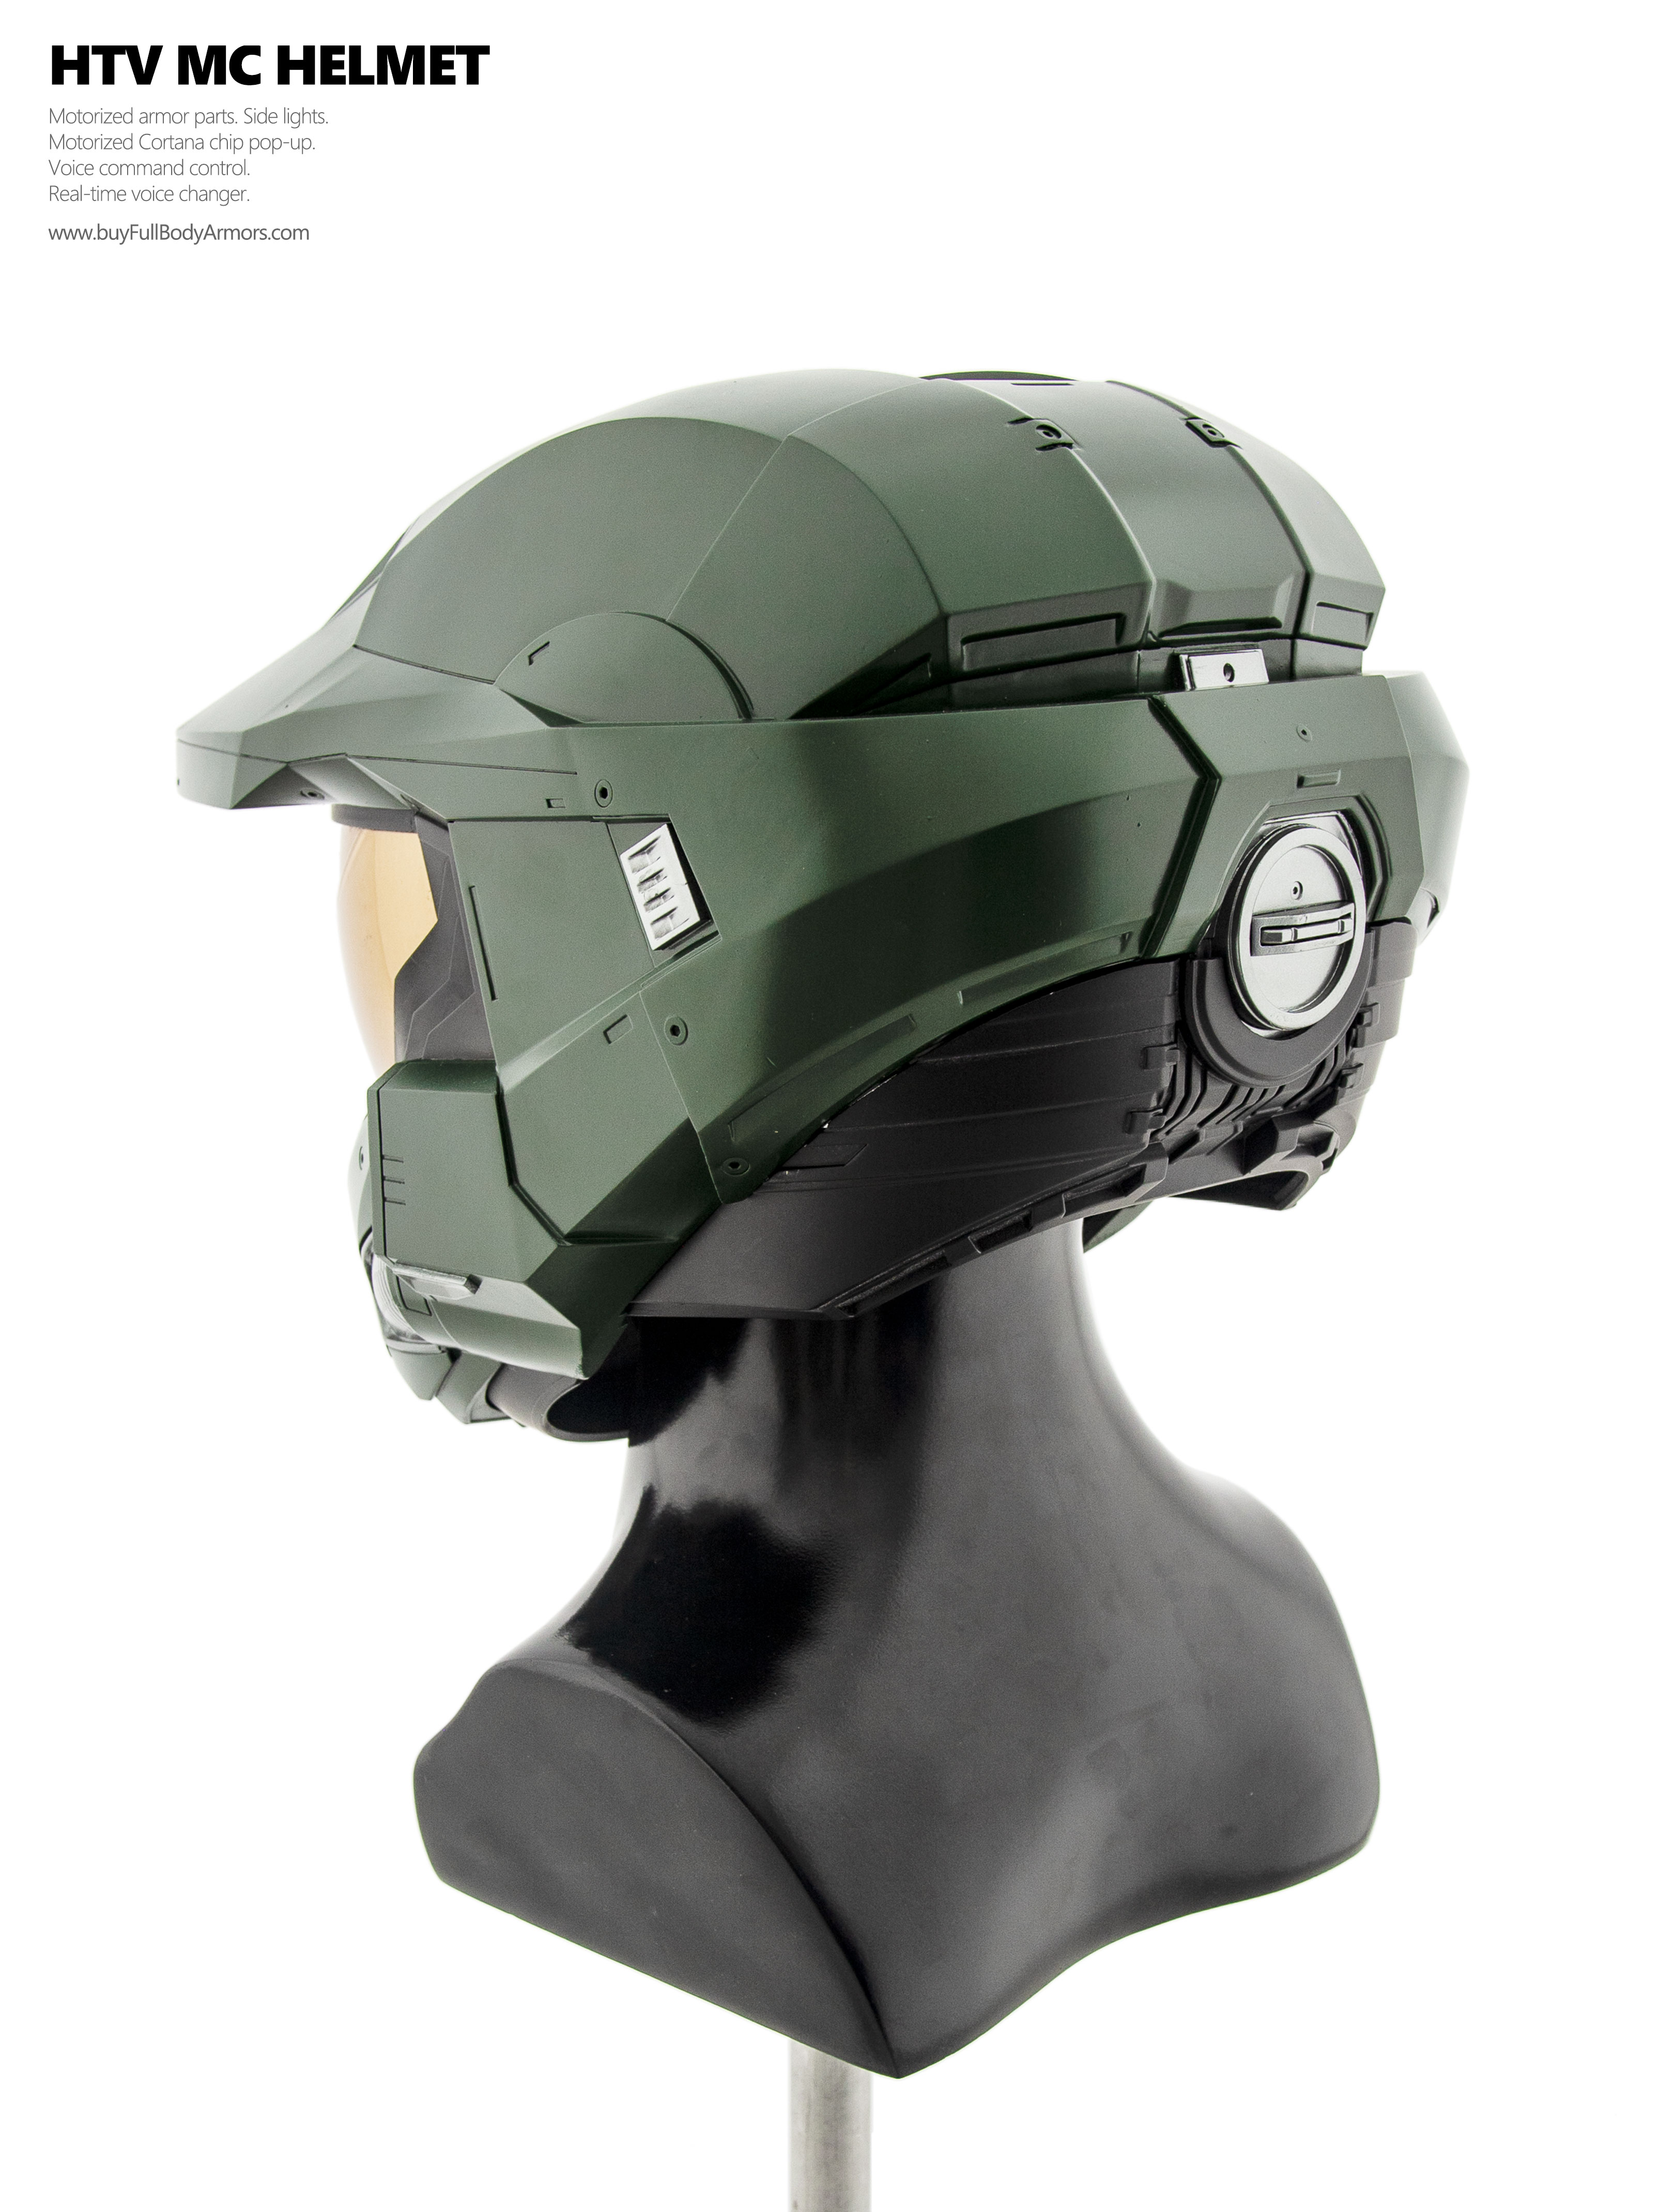 Wearable MASTER CHIEF helmet (Halo Infinity and Halo TV Series Season 2 Version) back side